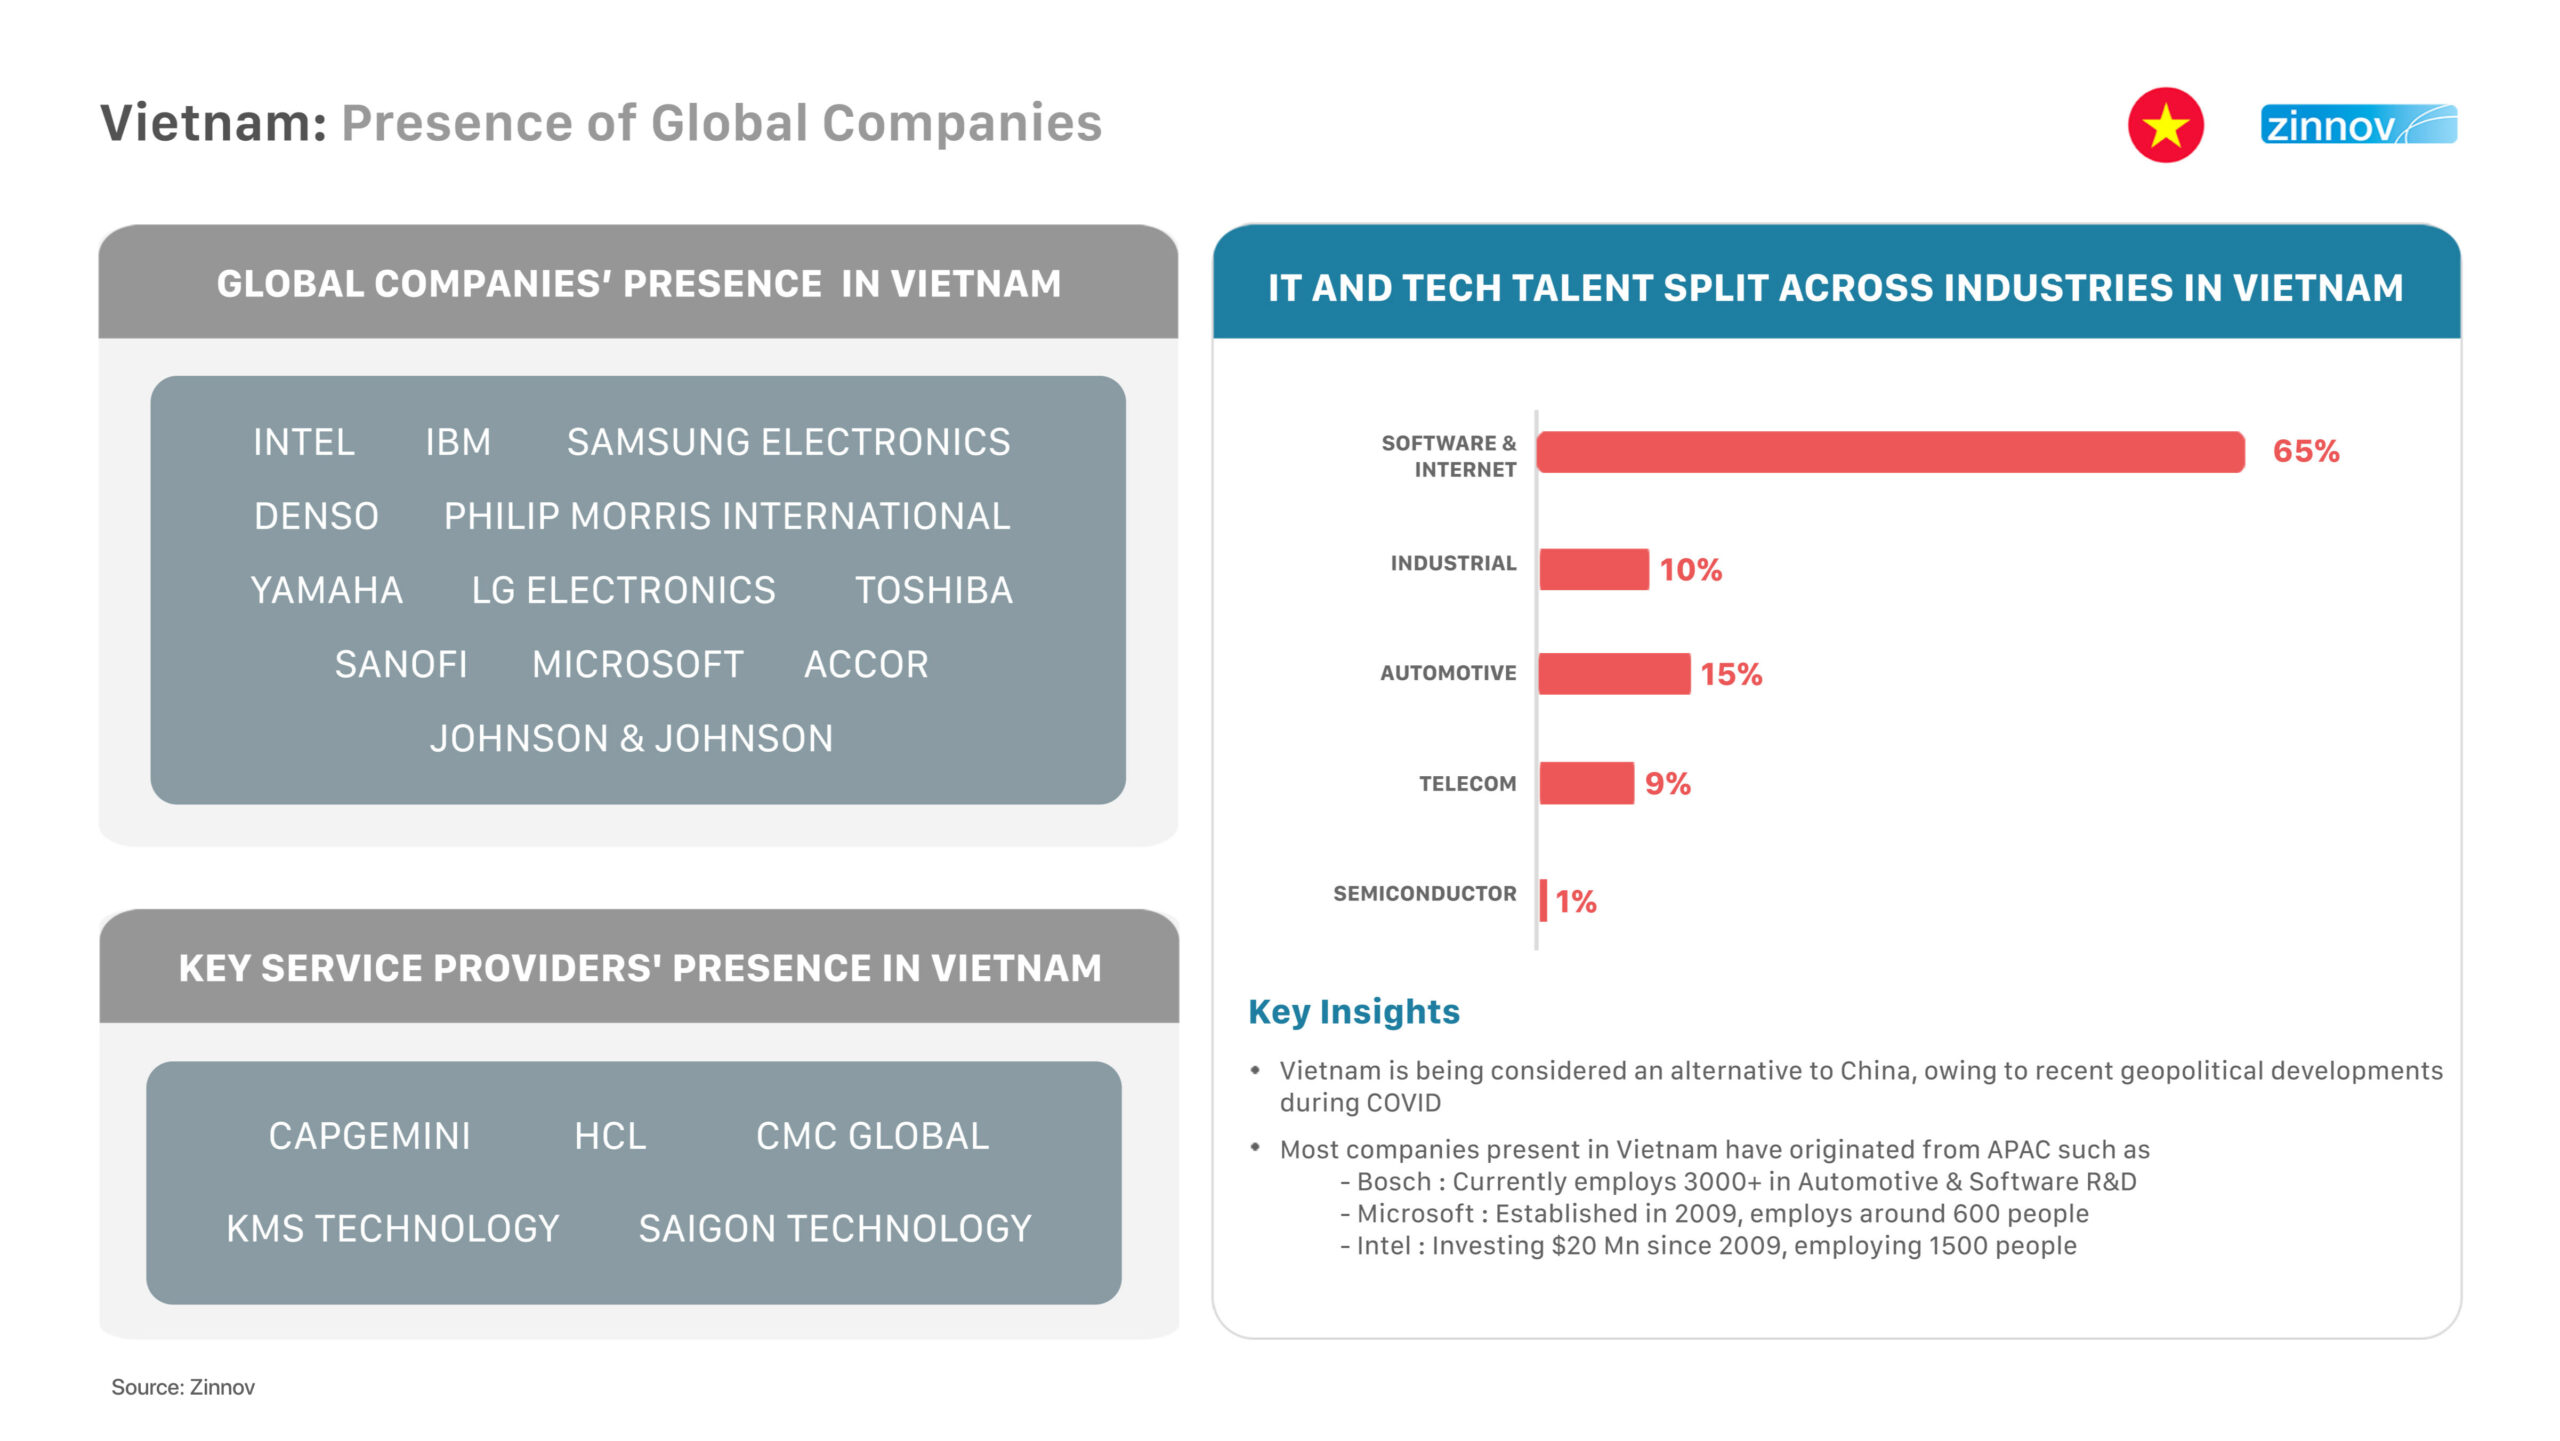 Presence of Global companies in Vietnam